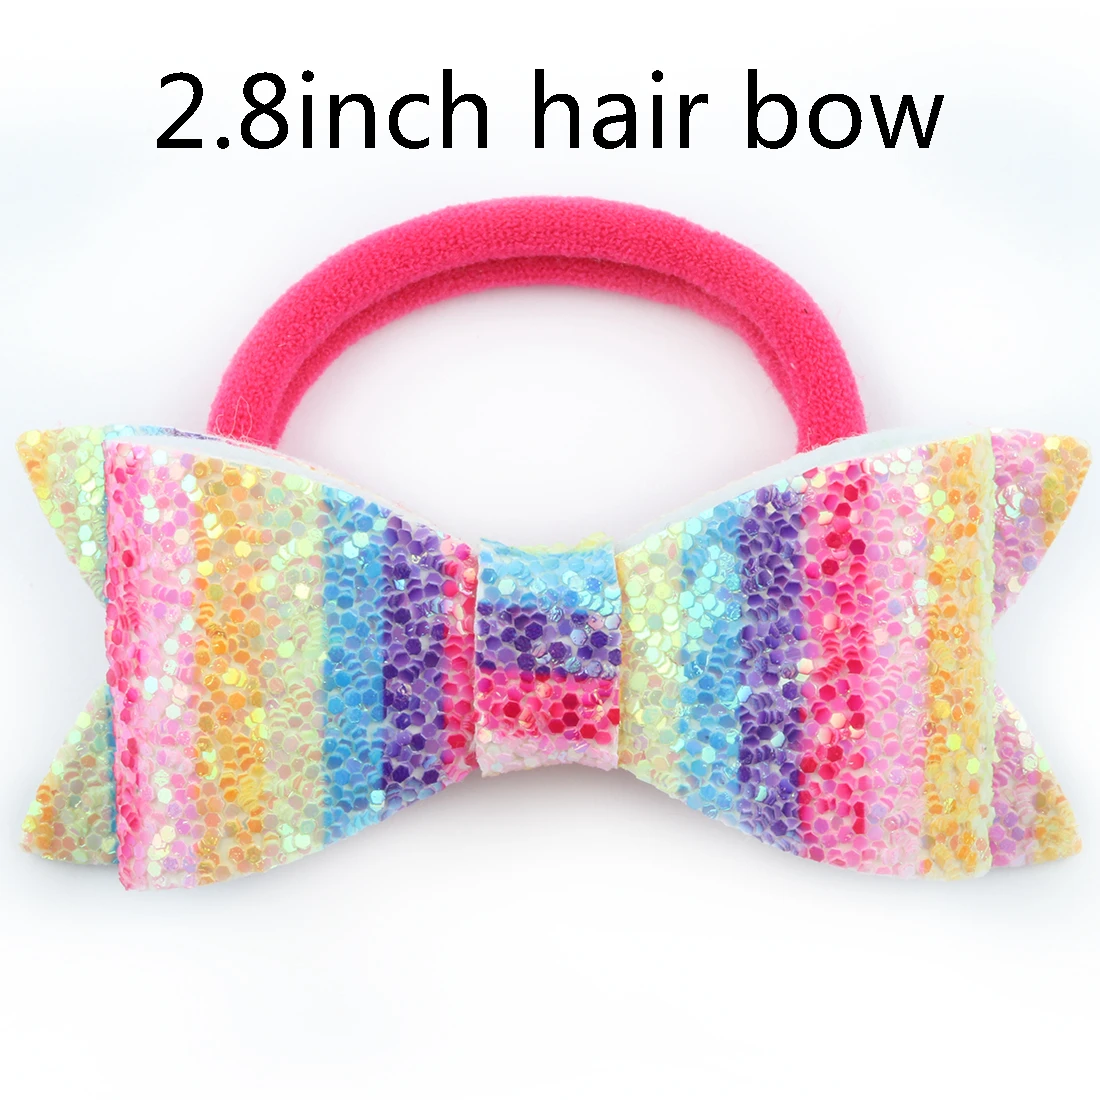 1 PC Child Hair Bow Tie Elastic Hair Band Glitter Hairbow Rope Rainbow Sequin Sparkly 3 Inch Bows Mermaid Girls Sweet Headwear - Цвет: 2.8inch hair bow-10